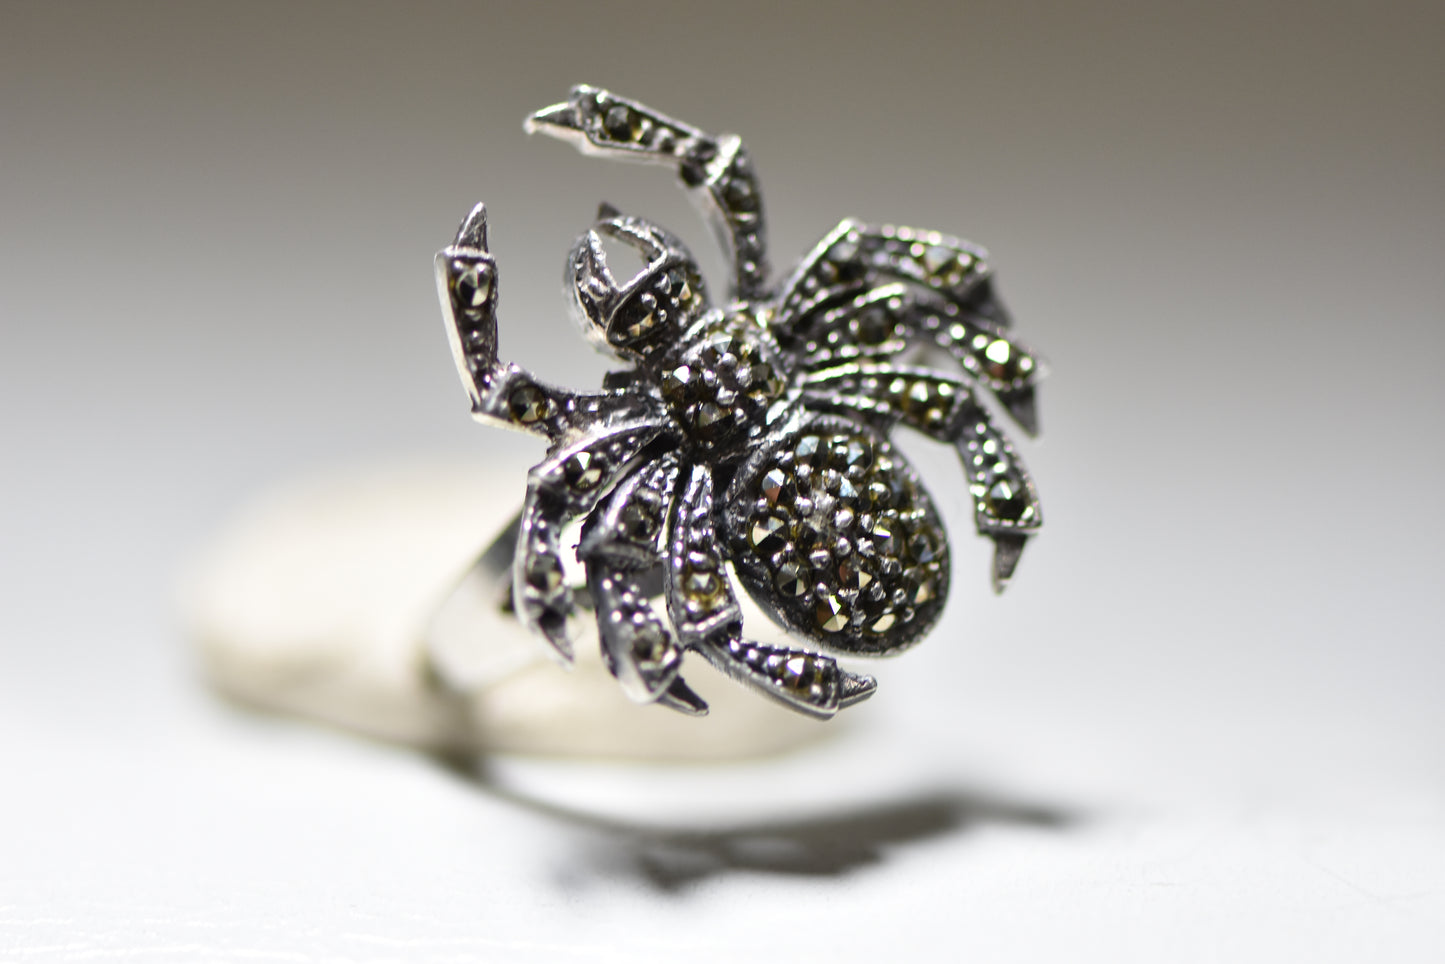 Spider Ring Marcasites black widow tarantula arachnid Halloween sterling silver